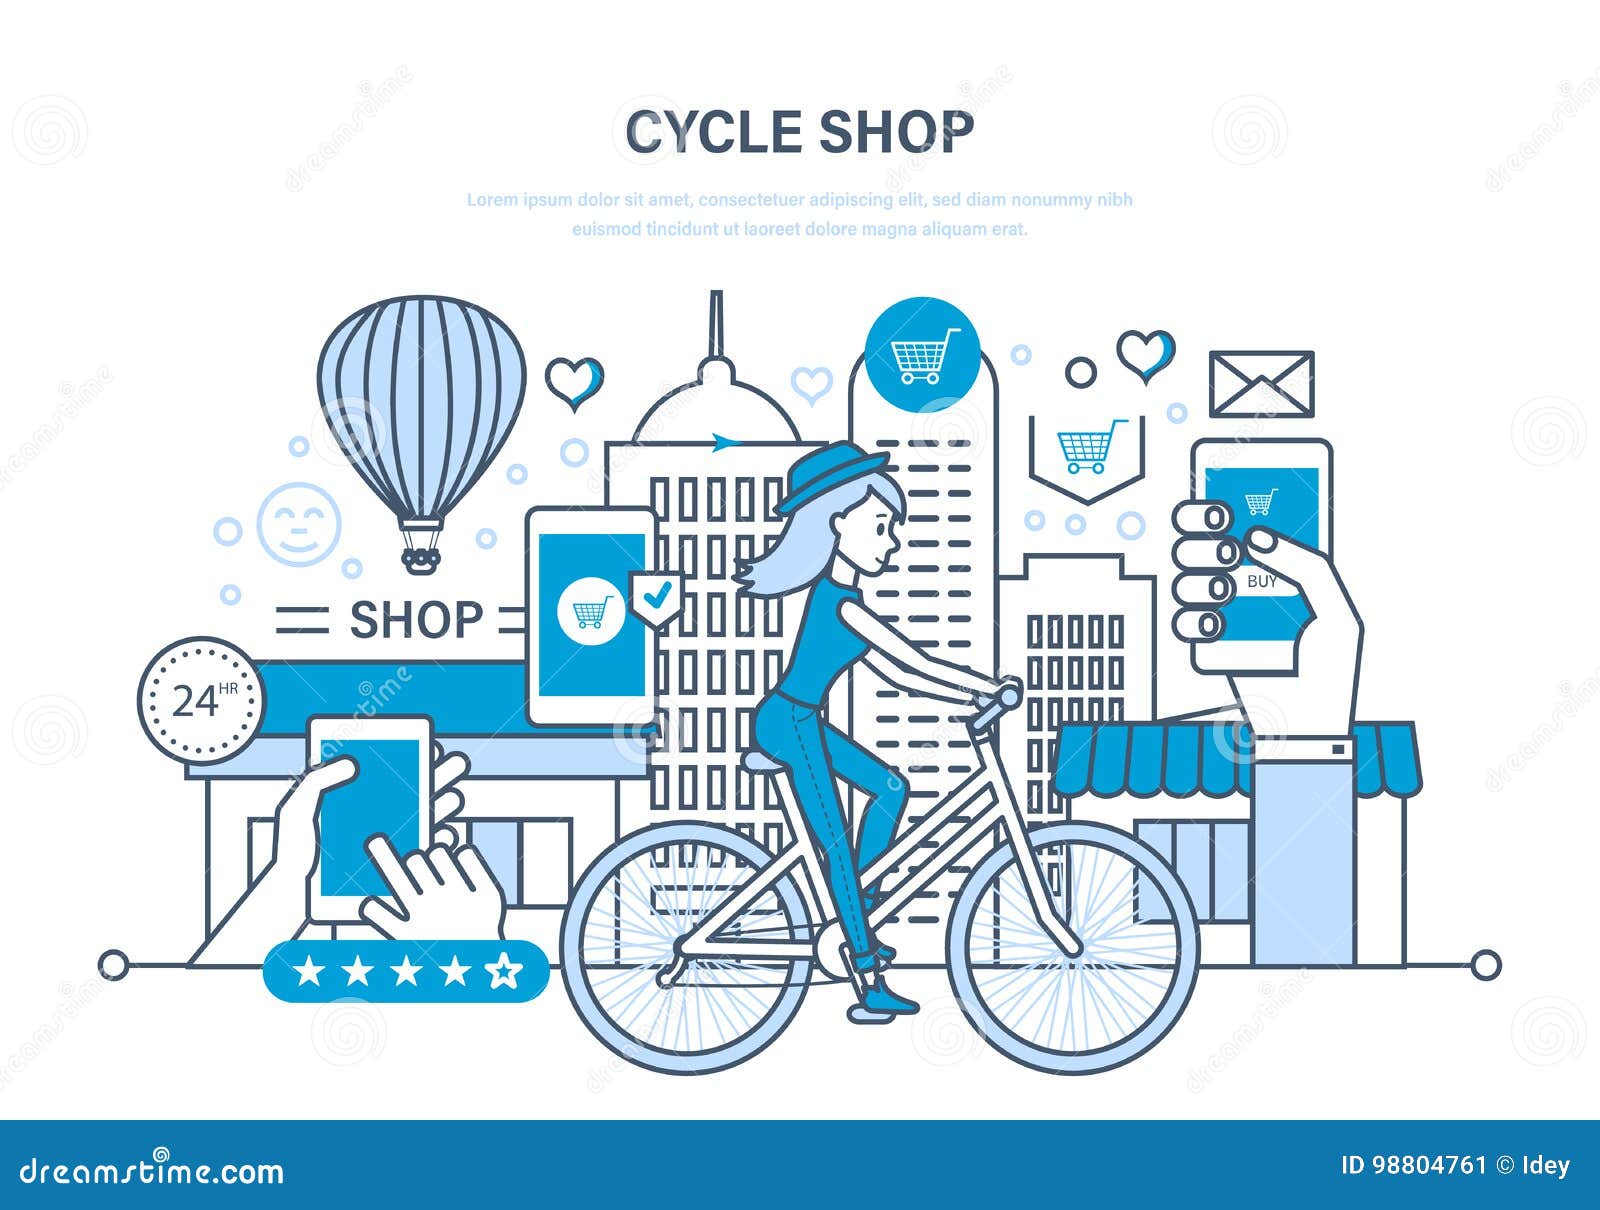 Cycle Shop